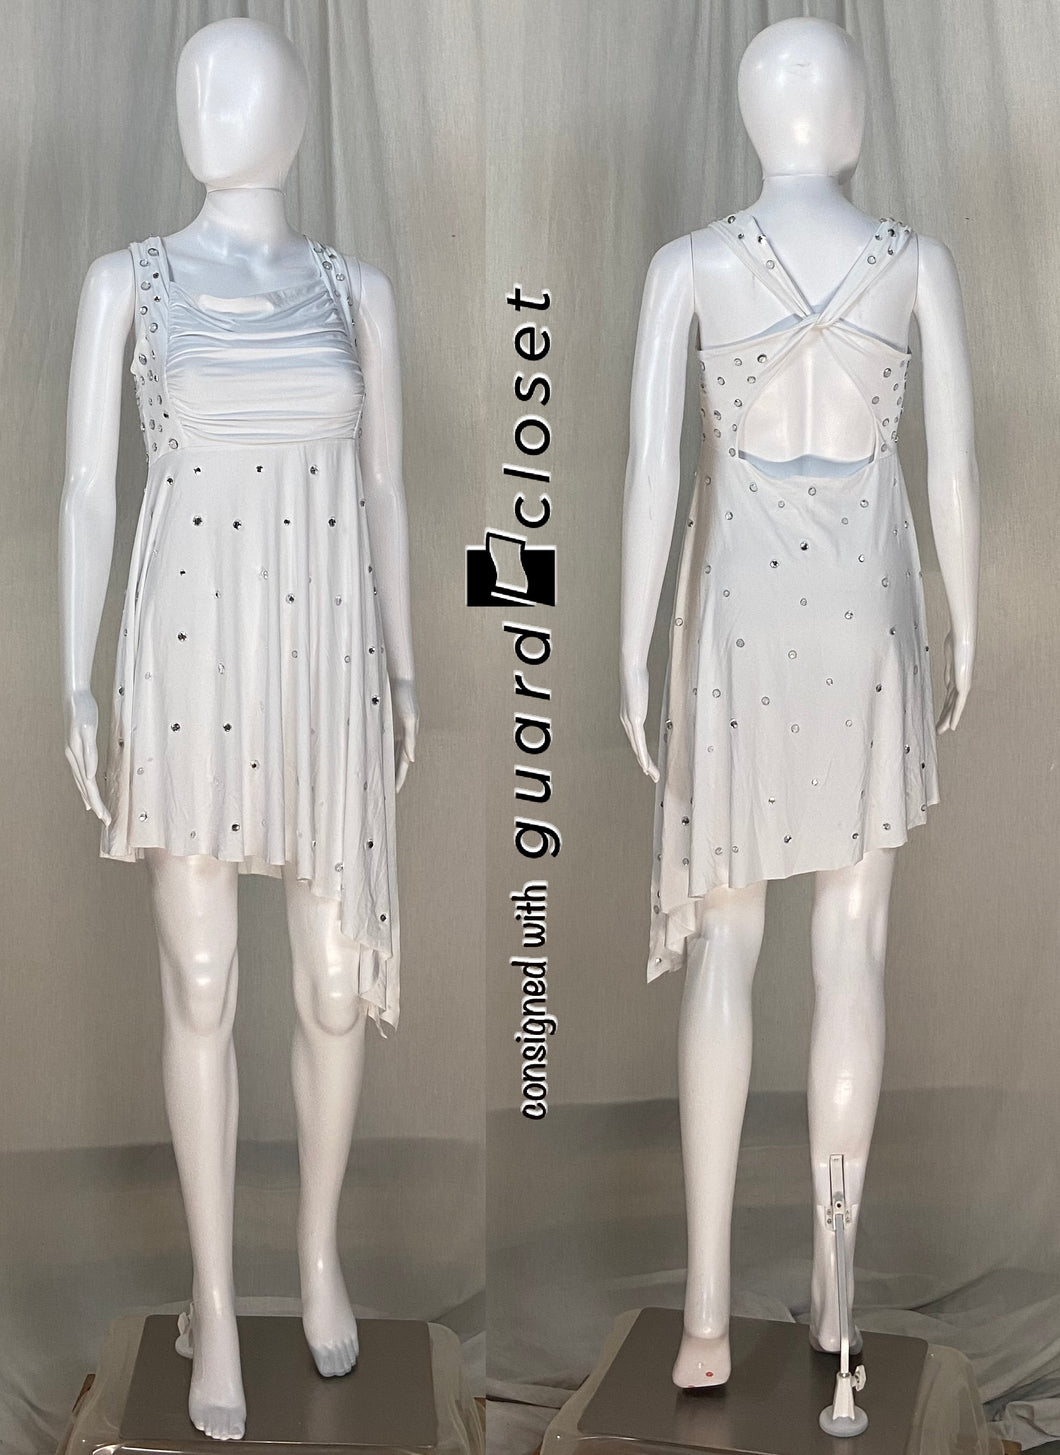 21 white cross back Natalie Dance Wear dresses with rhinestones